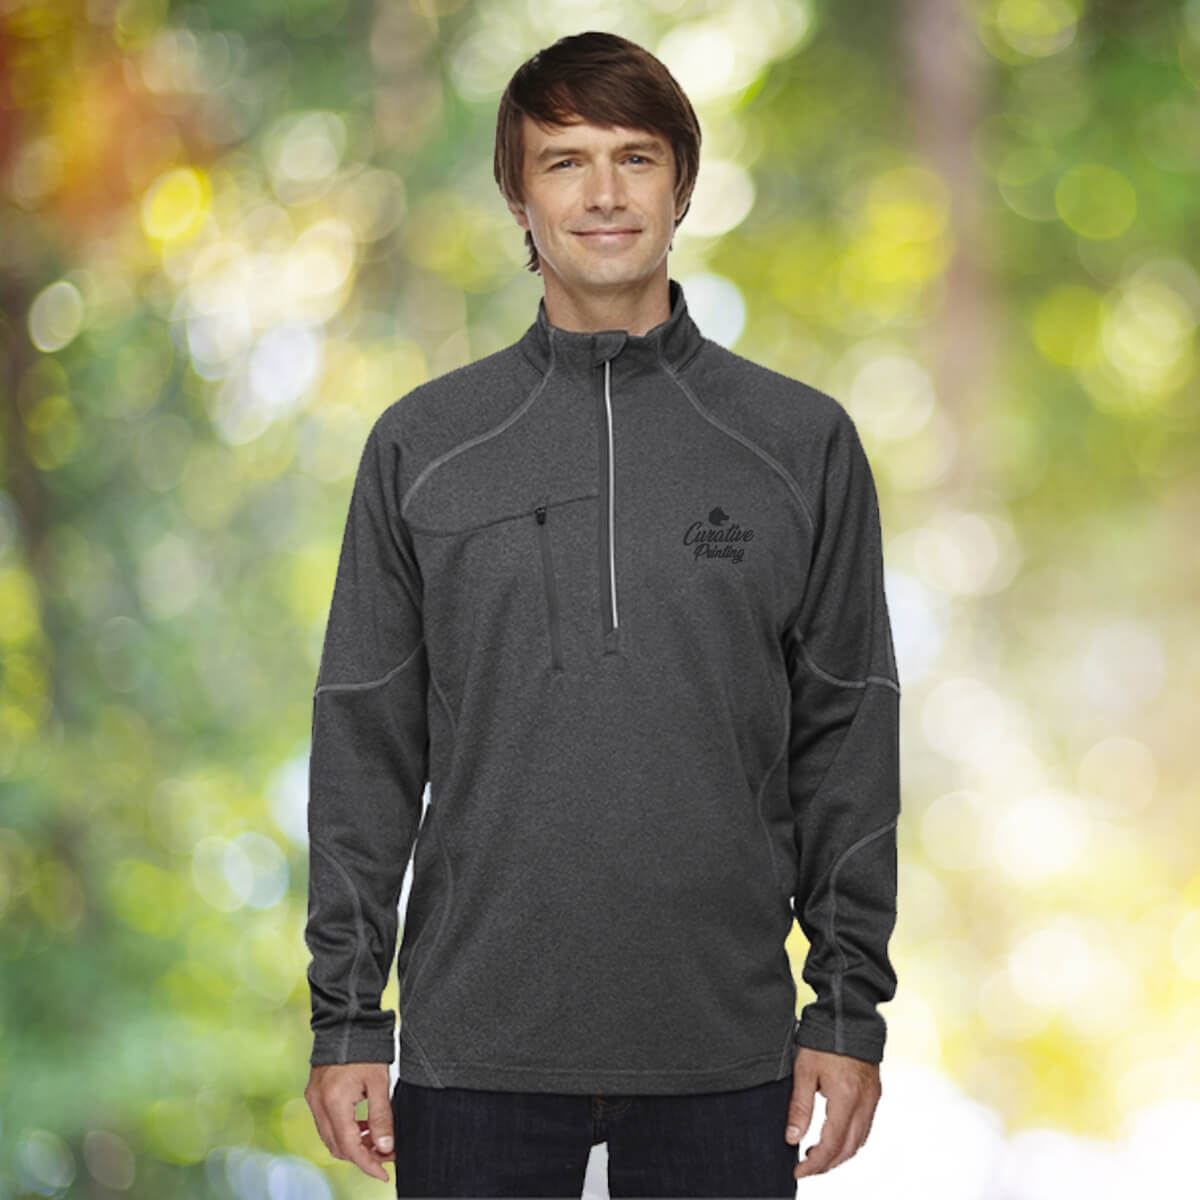 Man in the outdoors wearing grey quarter zip sweatshirt apparel with black curative printing logo imprint